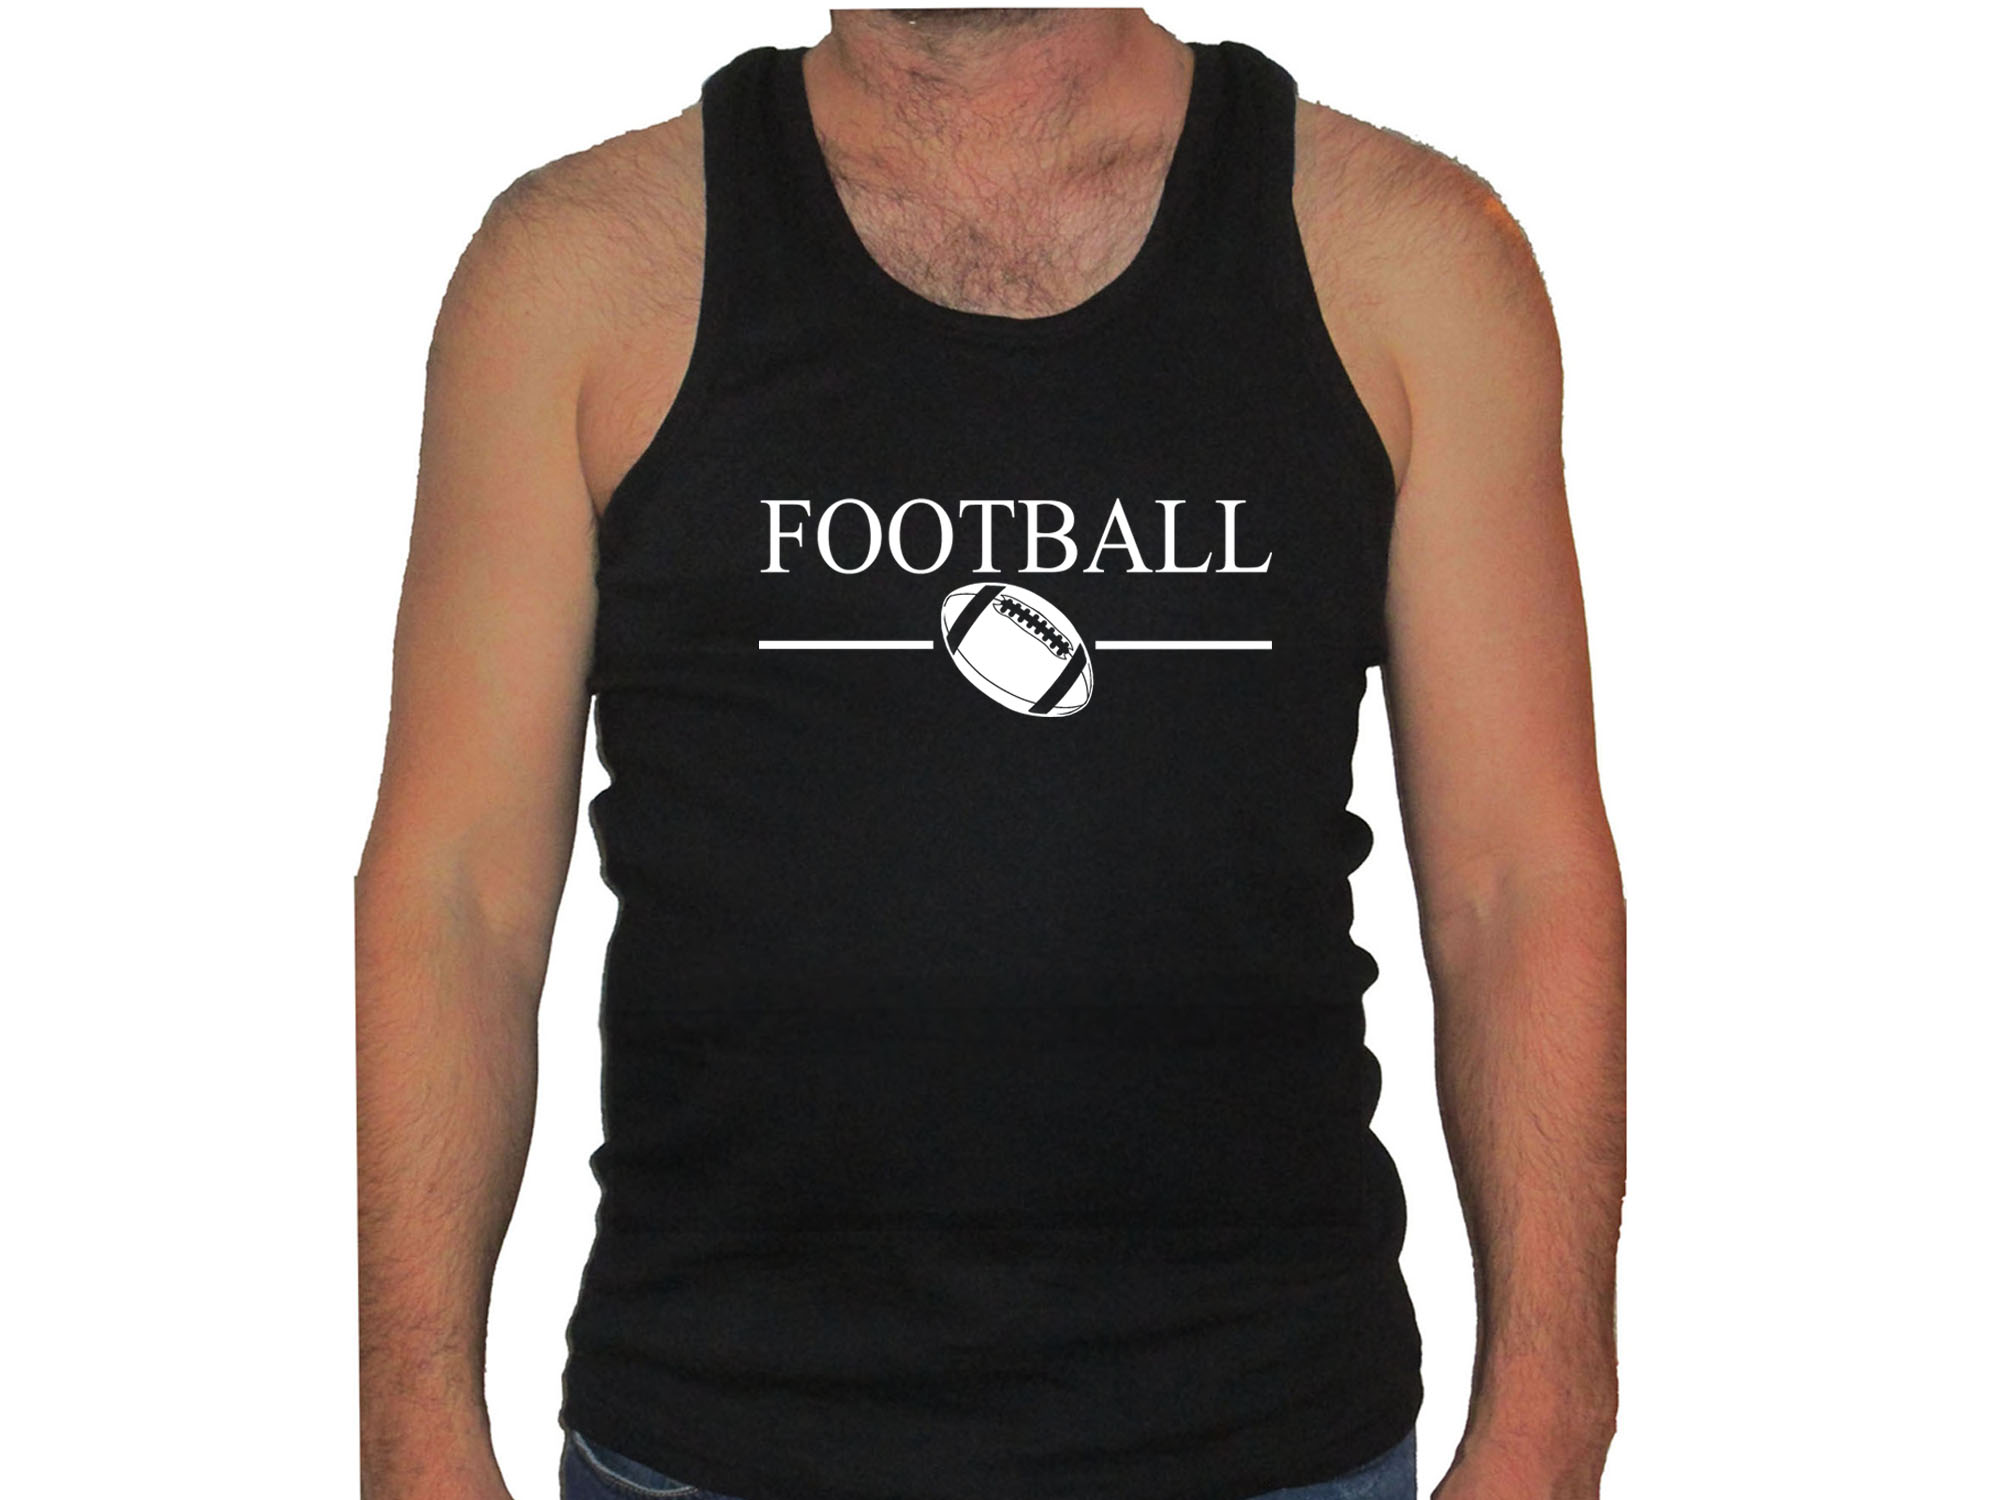 Football black muscle sleeveless tank top